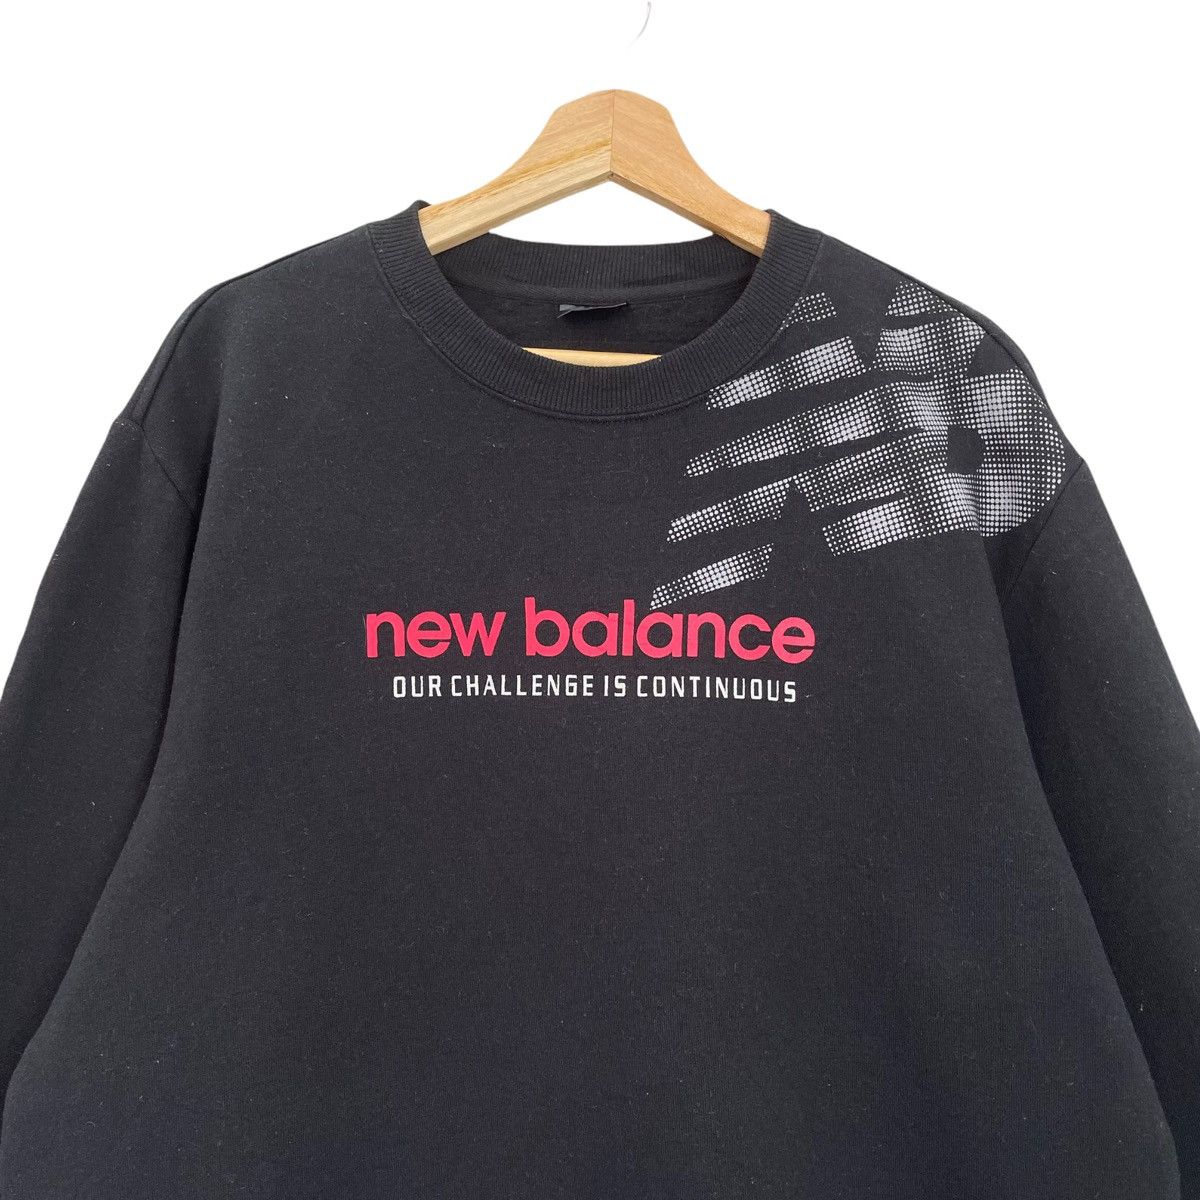 Vintage New Balance Spellout Logo Pullover Sweatshirt Size M - 4